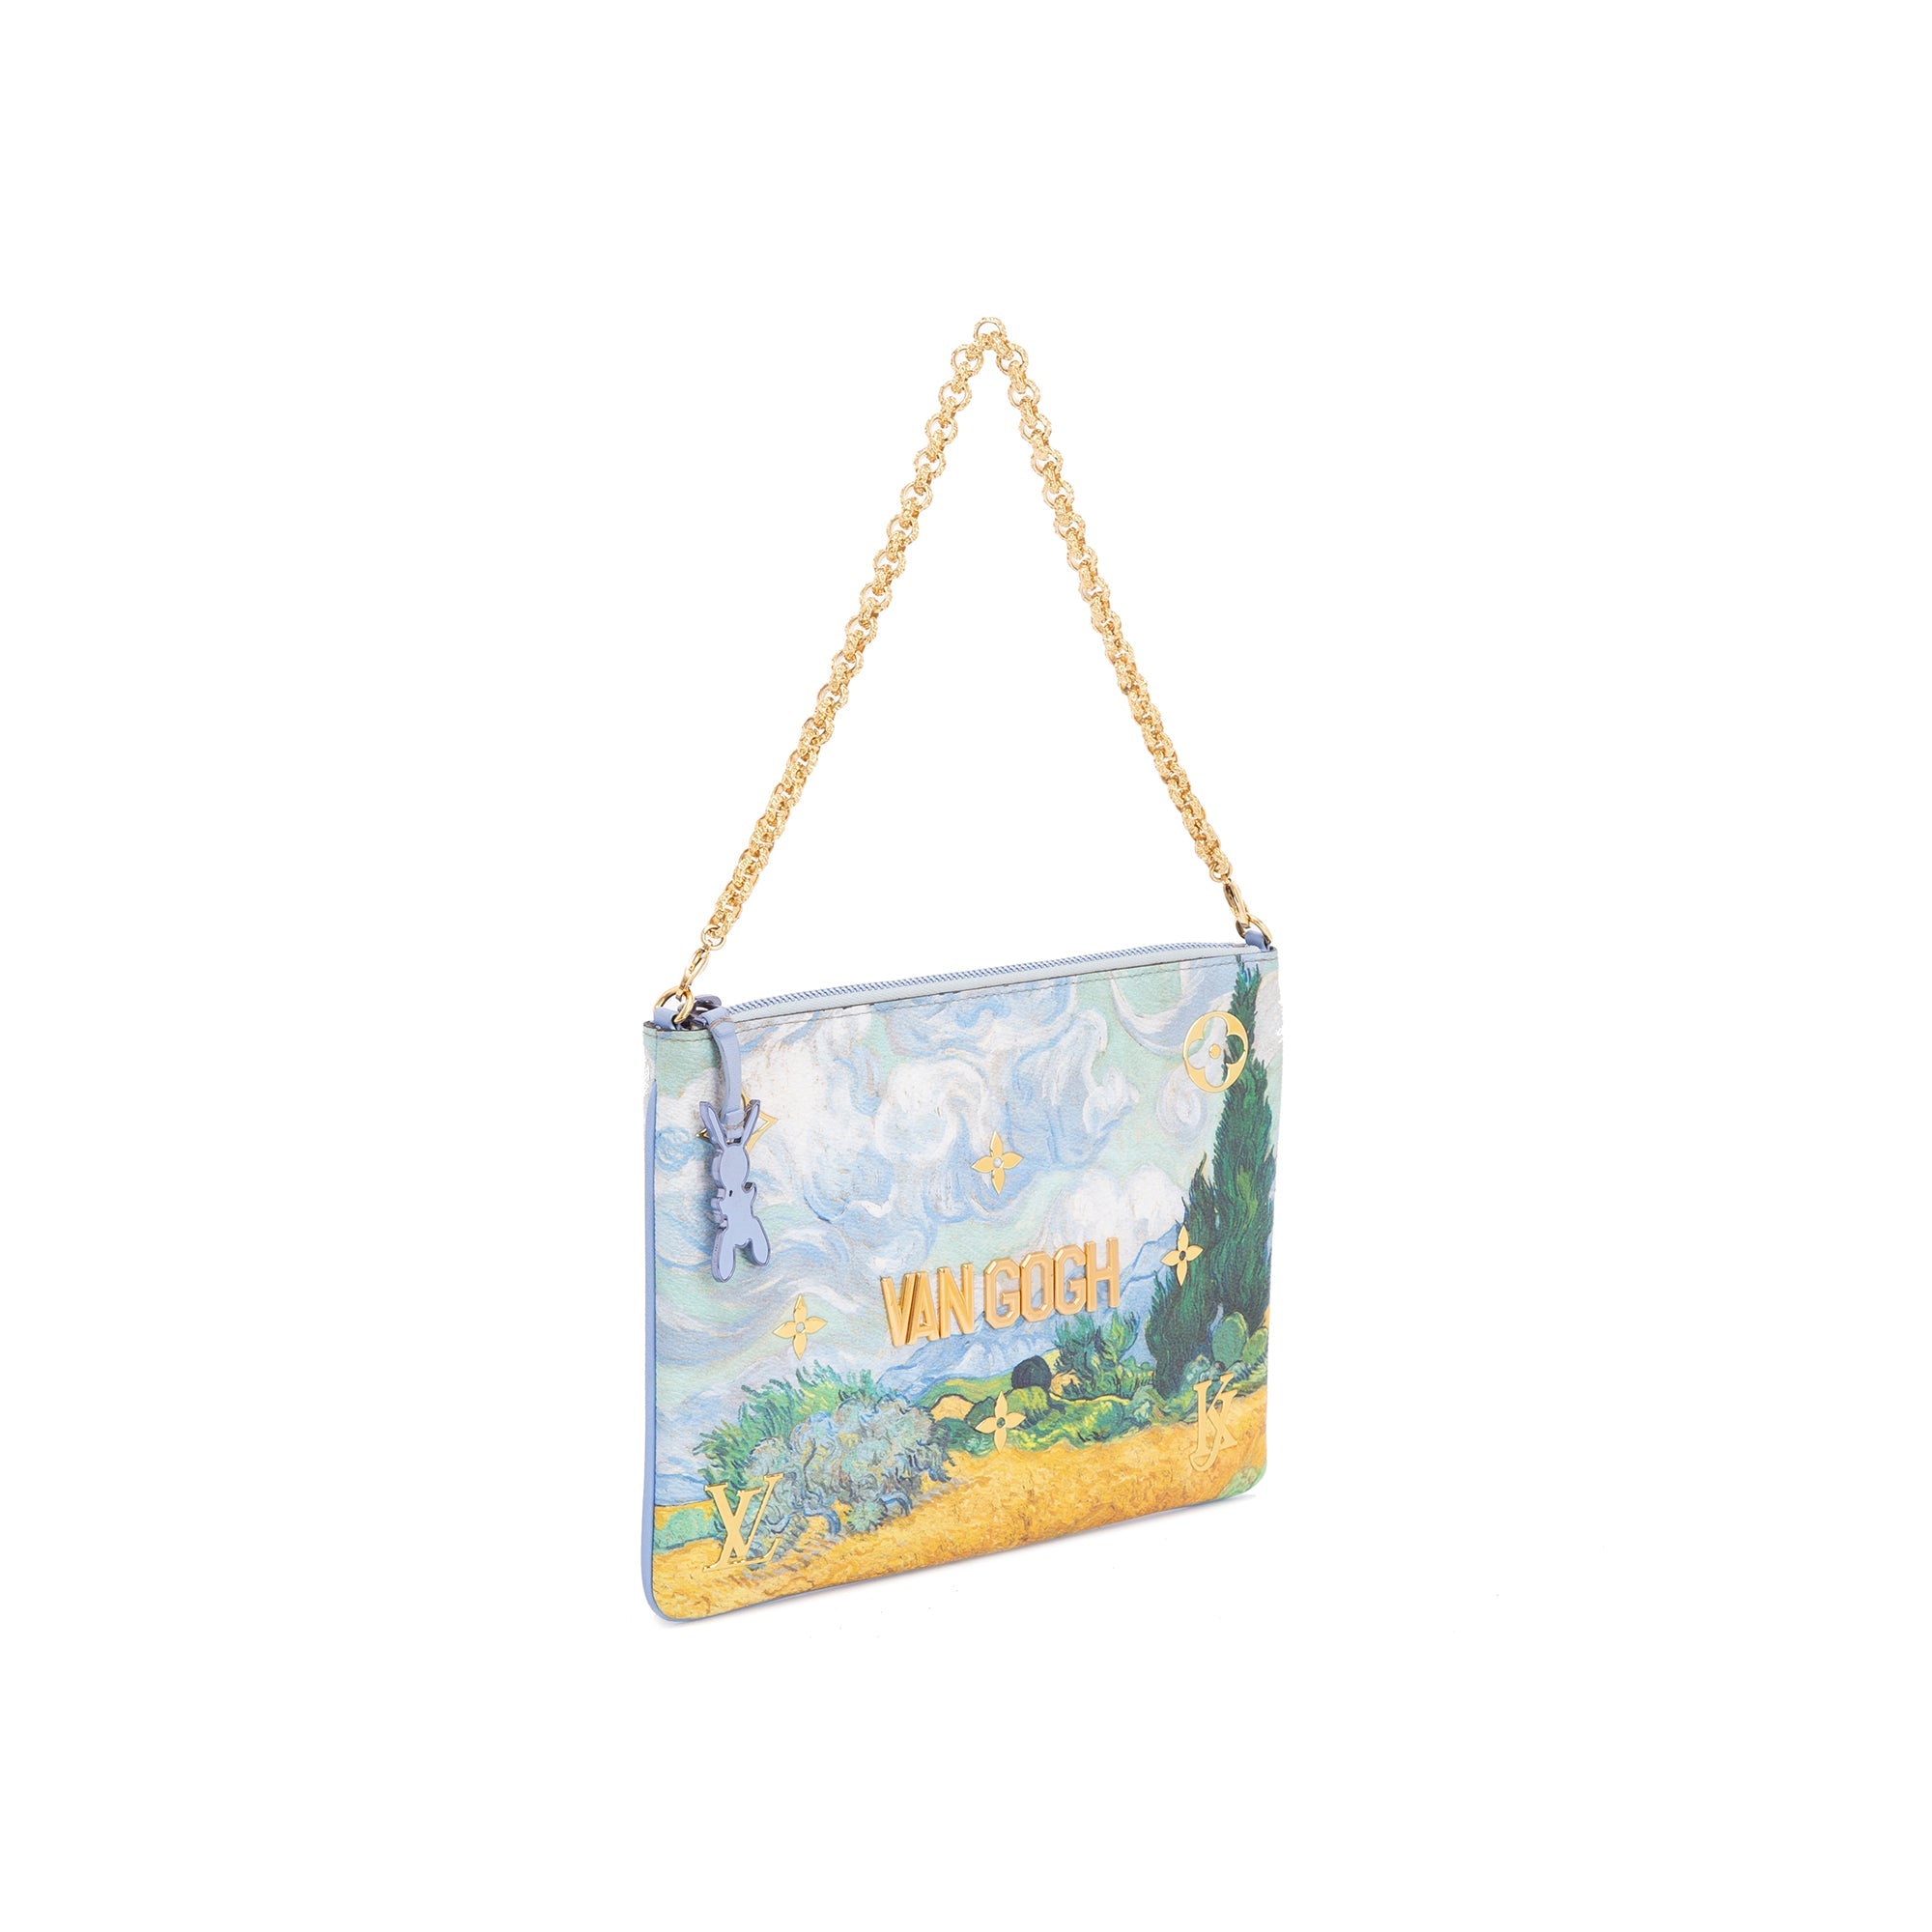 Louis Vuitton Speedy Handbag Limited Edition Jeff Koons Van Gogh Print Ca